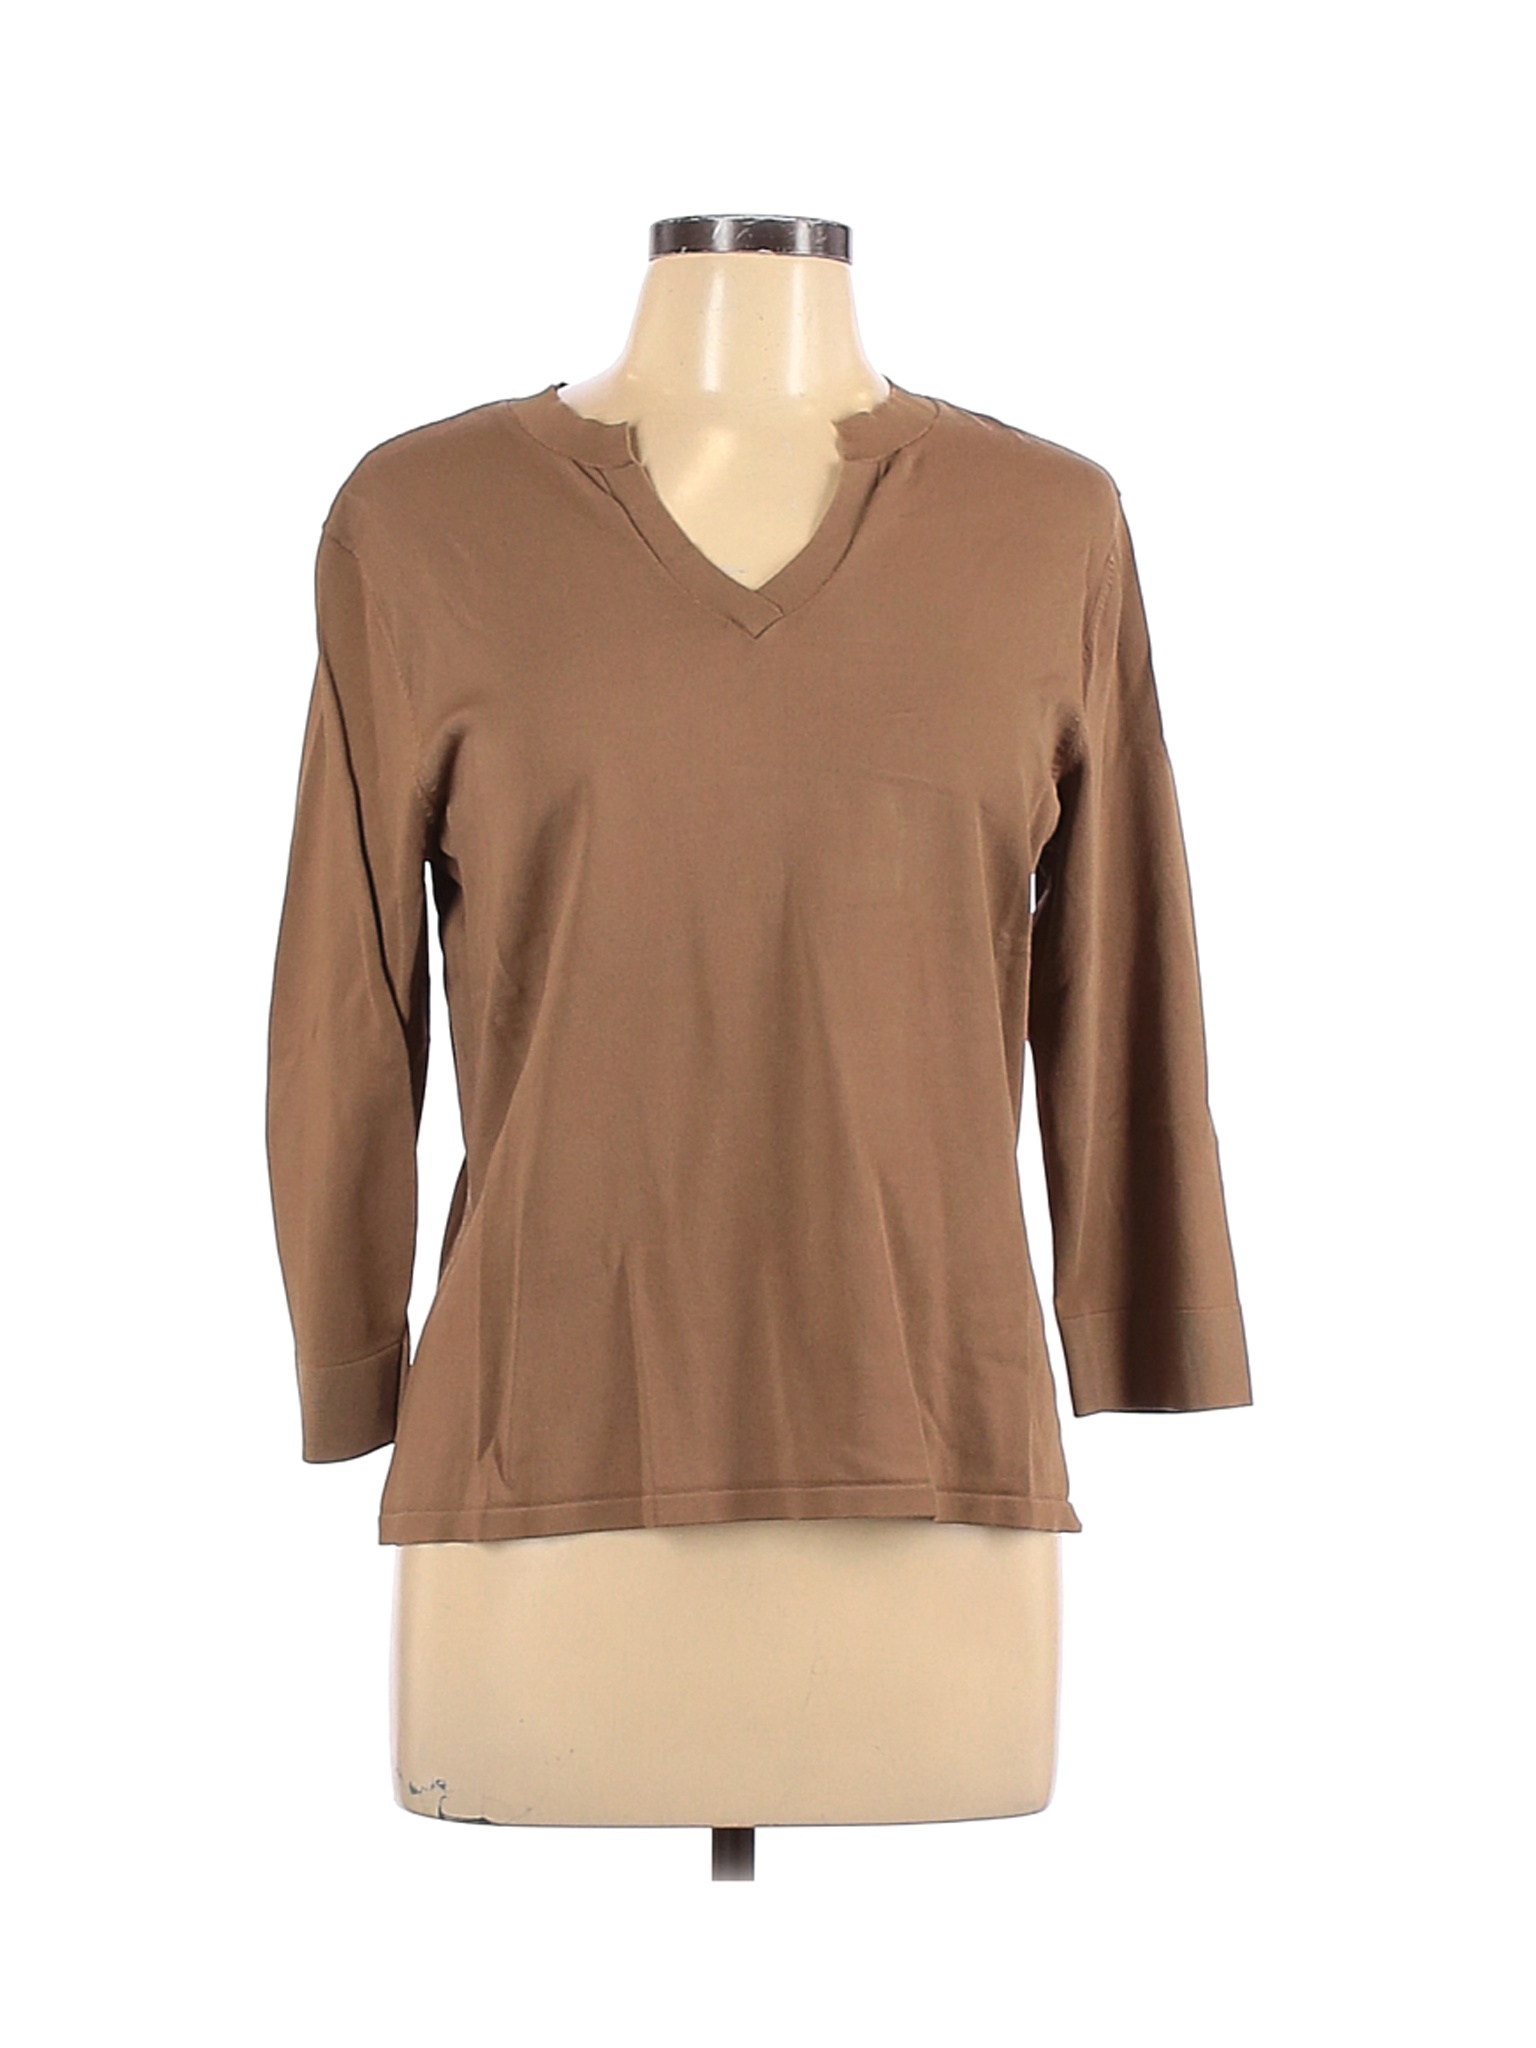 Talbots Women Brown 3/4 Sleeve T-Shirt L Petites | eBay